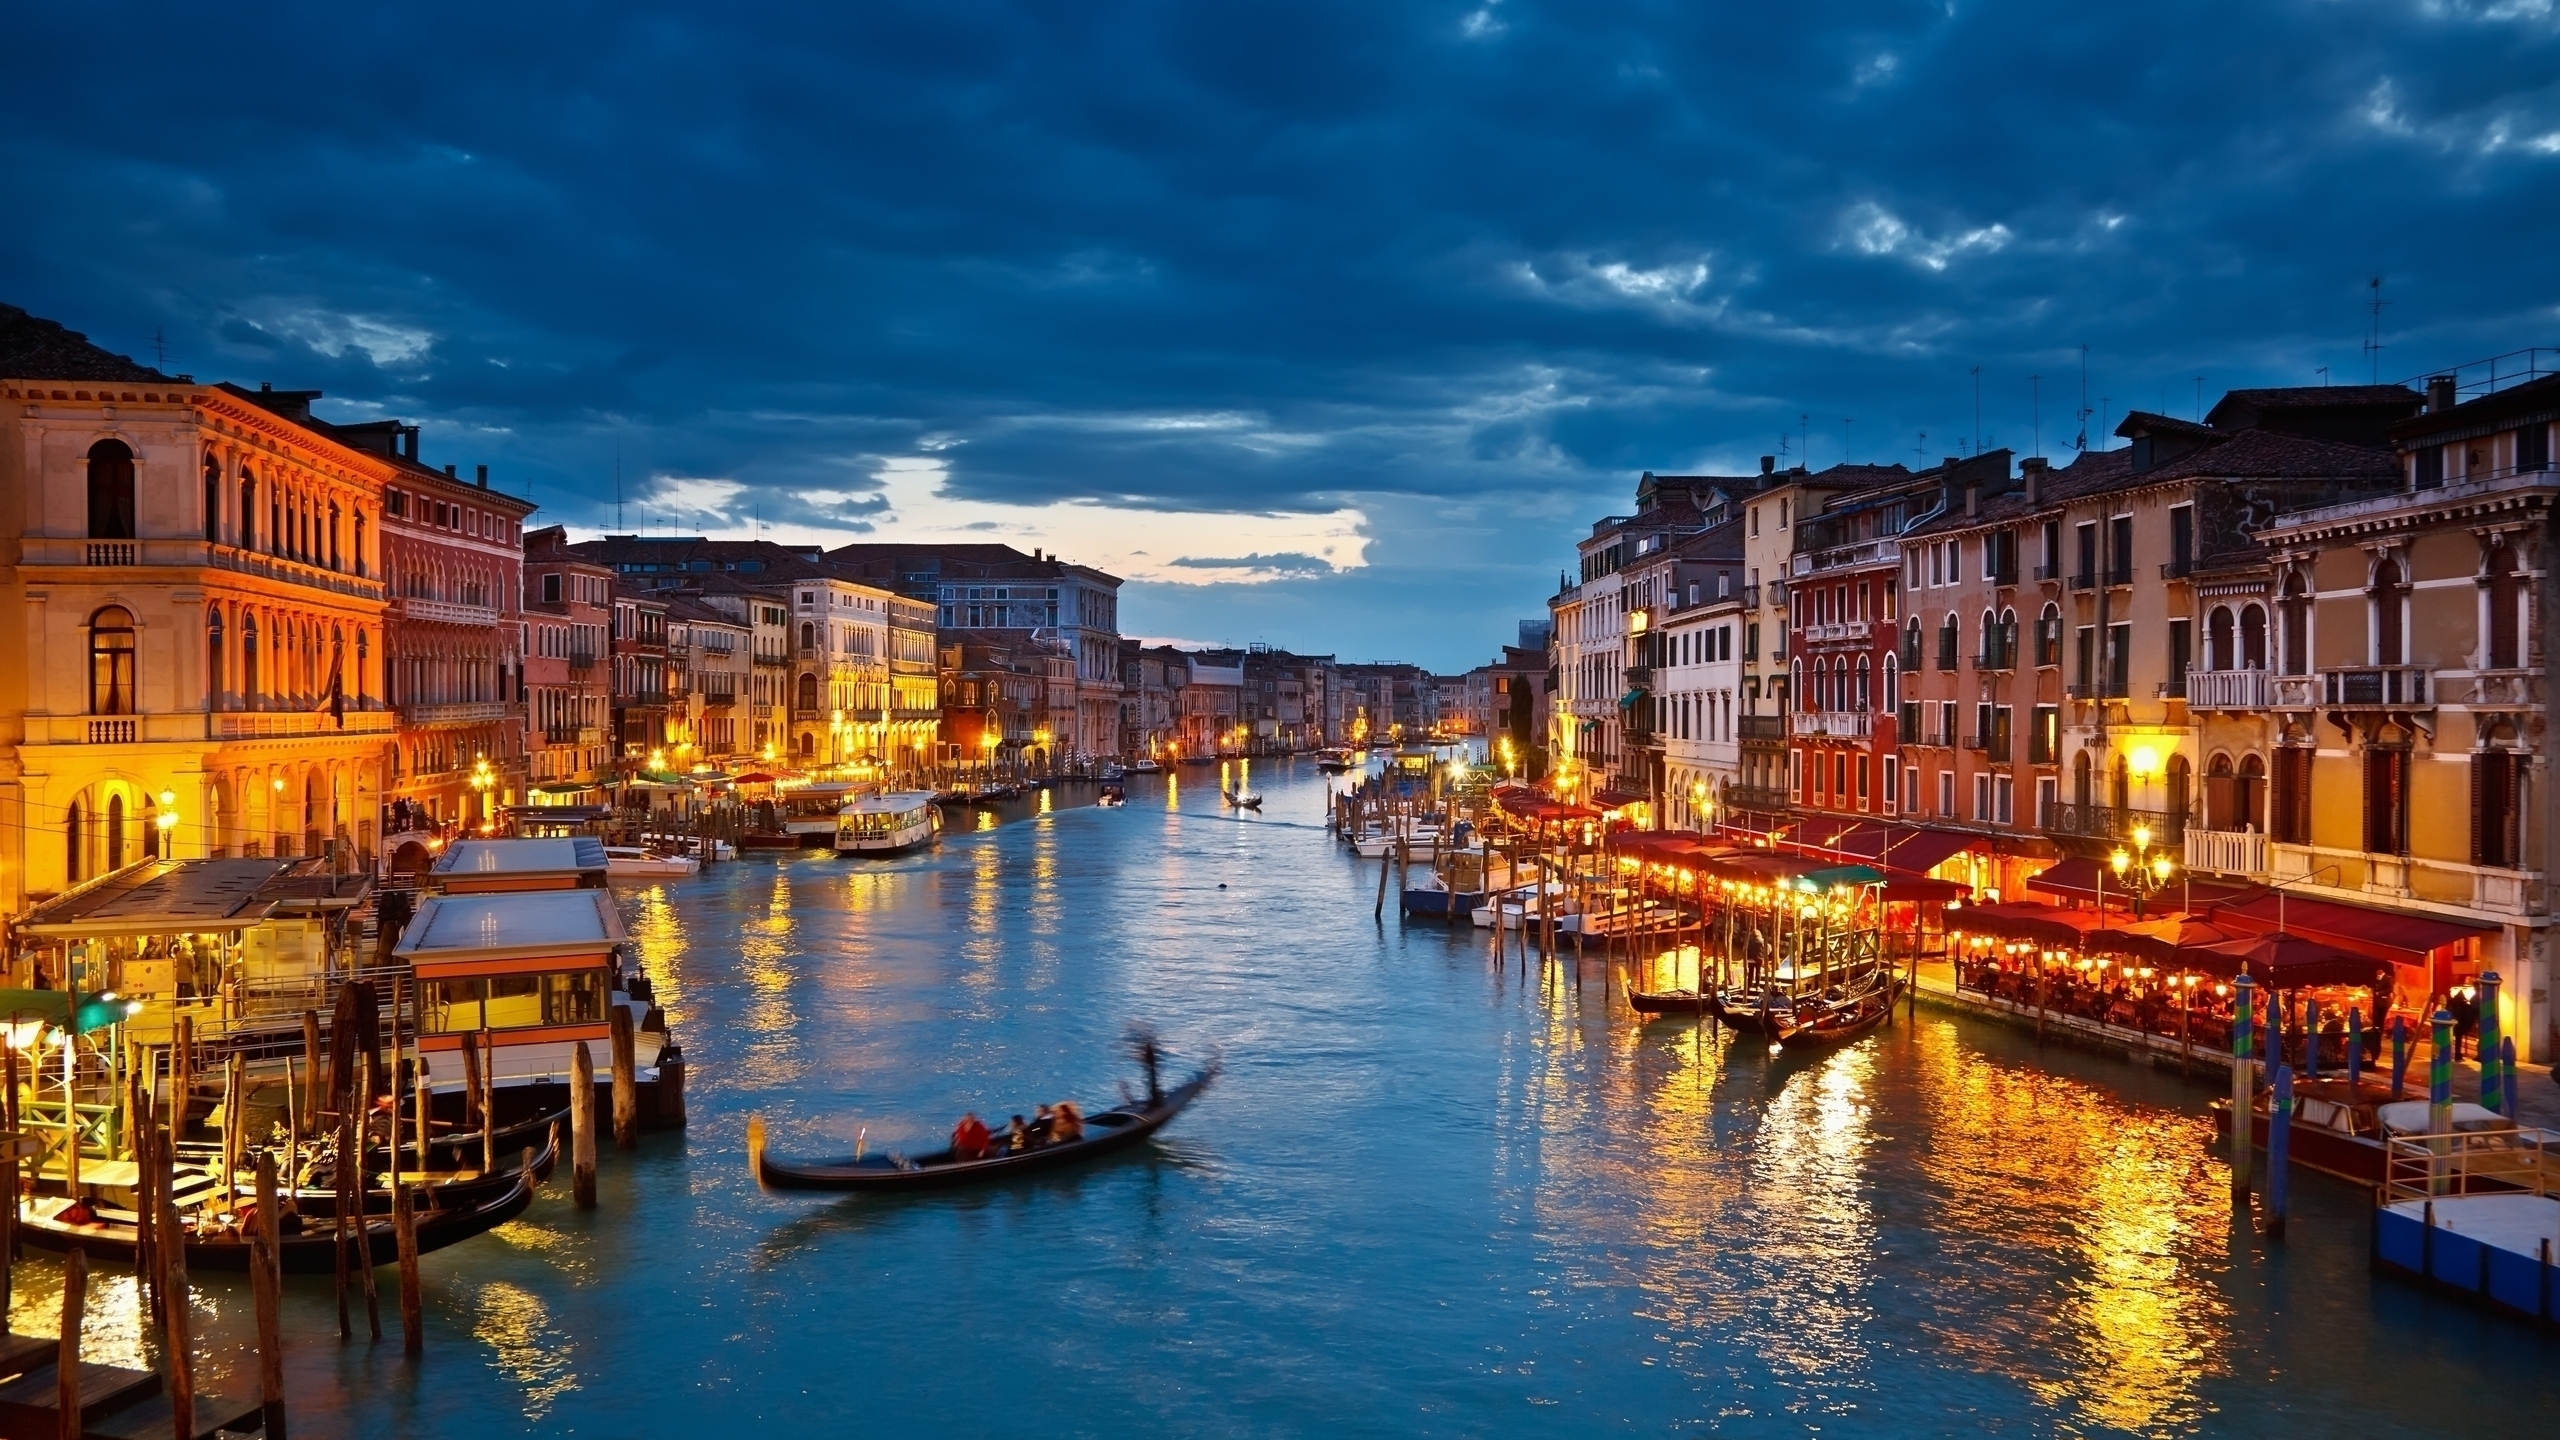 Night in Venice for 2560x1440 HDTV resolution